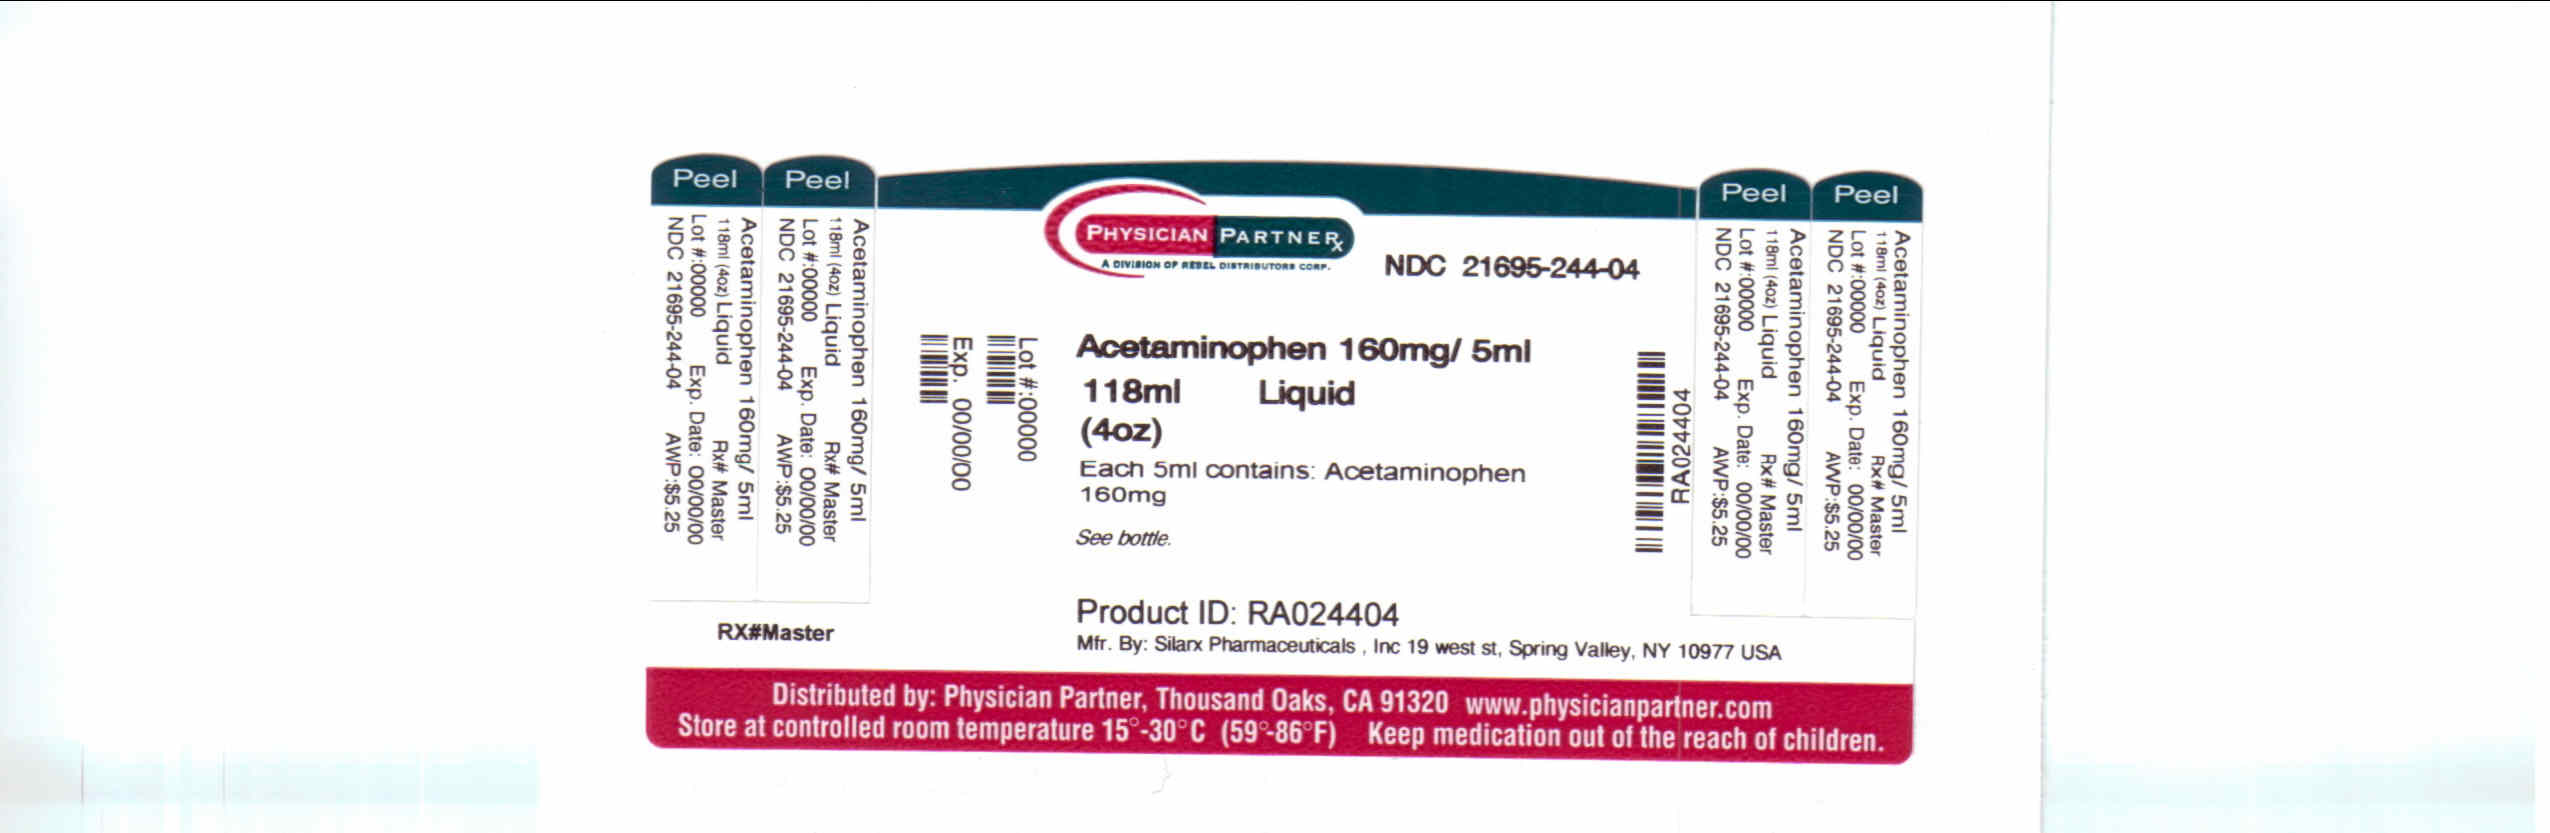 Acetaminophen 180mg / 5ml